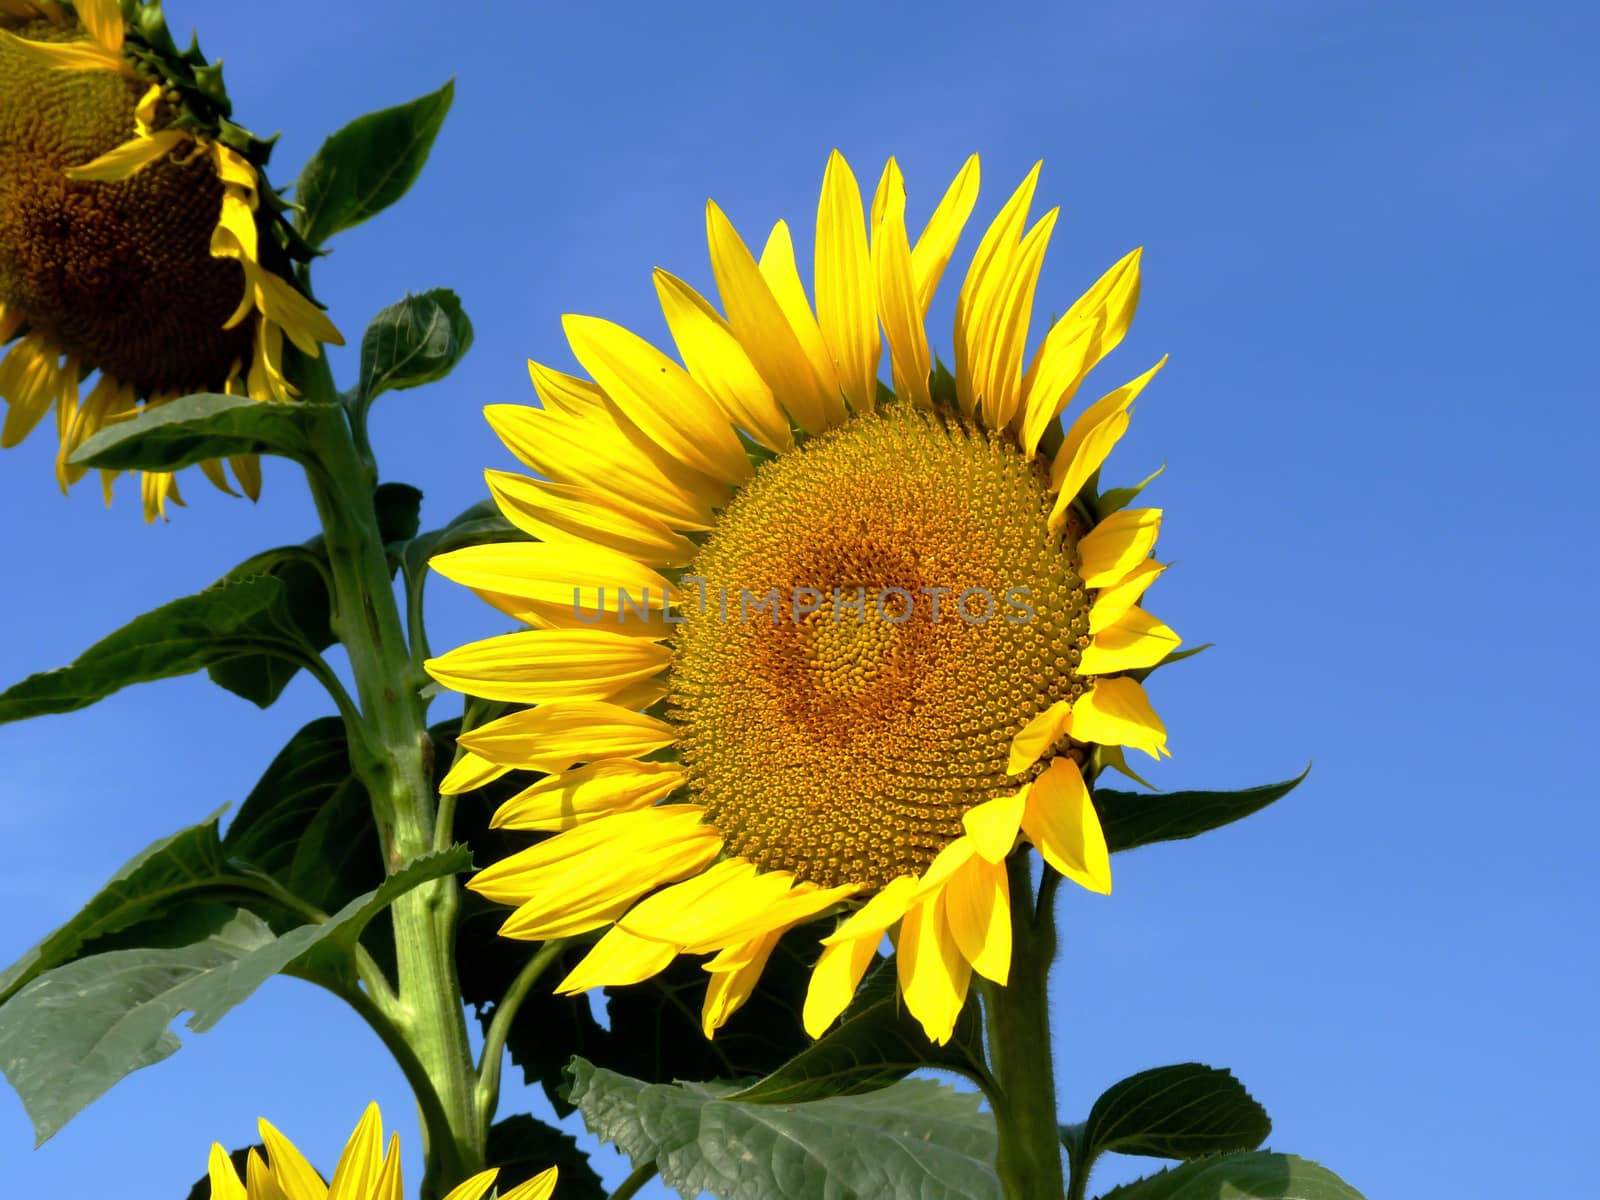 Sunflower by Vadimdem